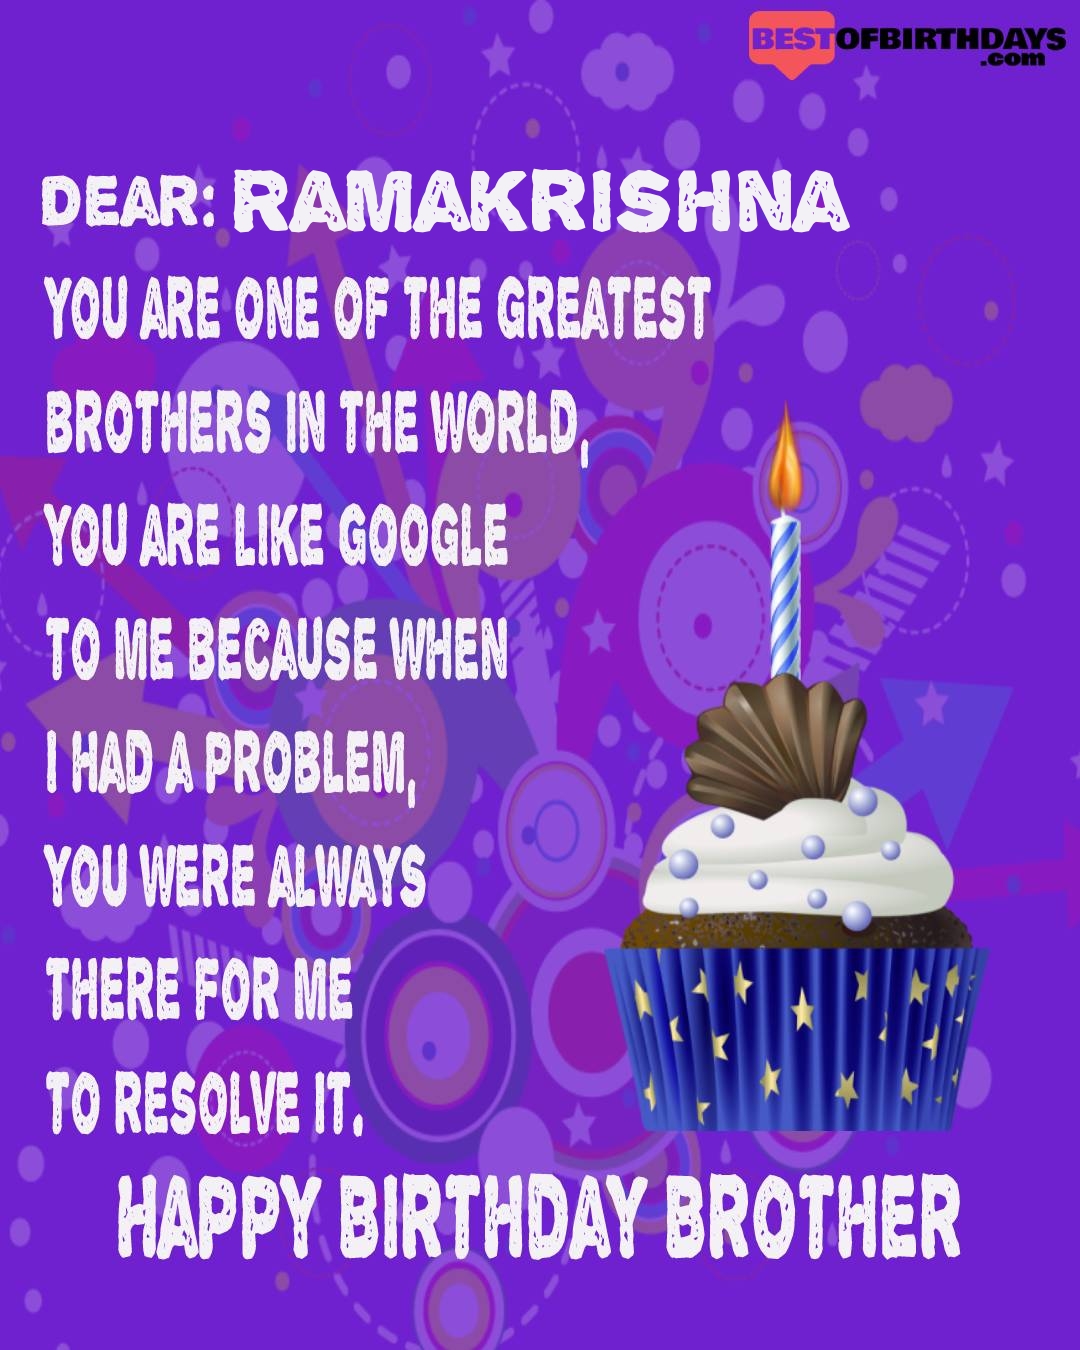 Happy birthday ramakrishna bhai brother bro